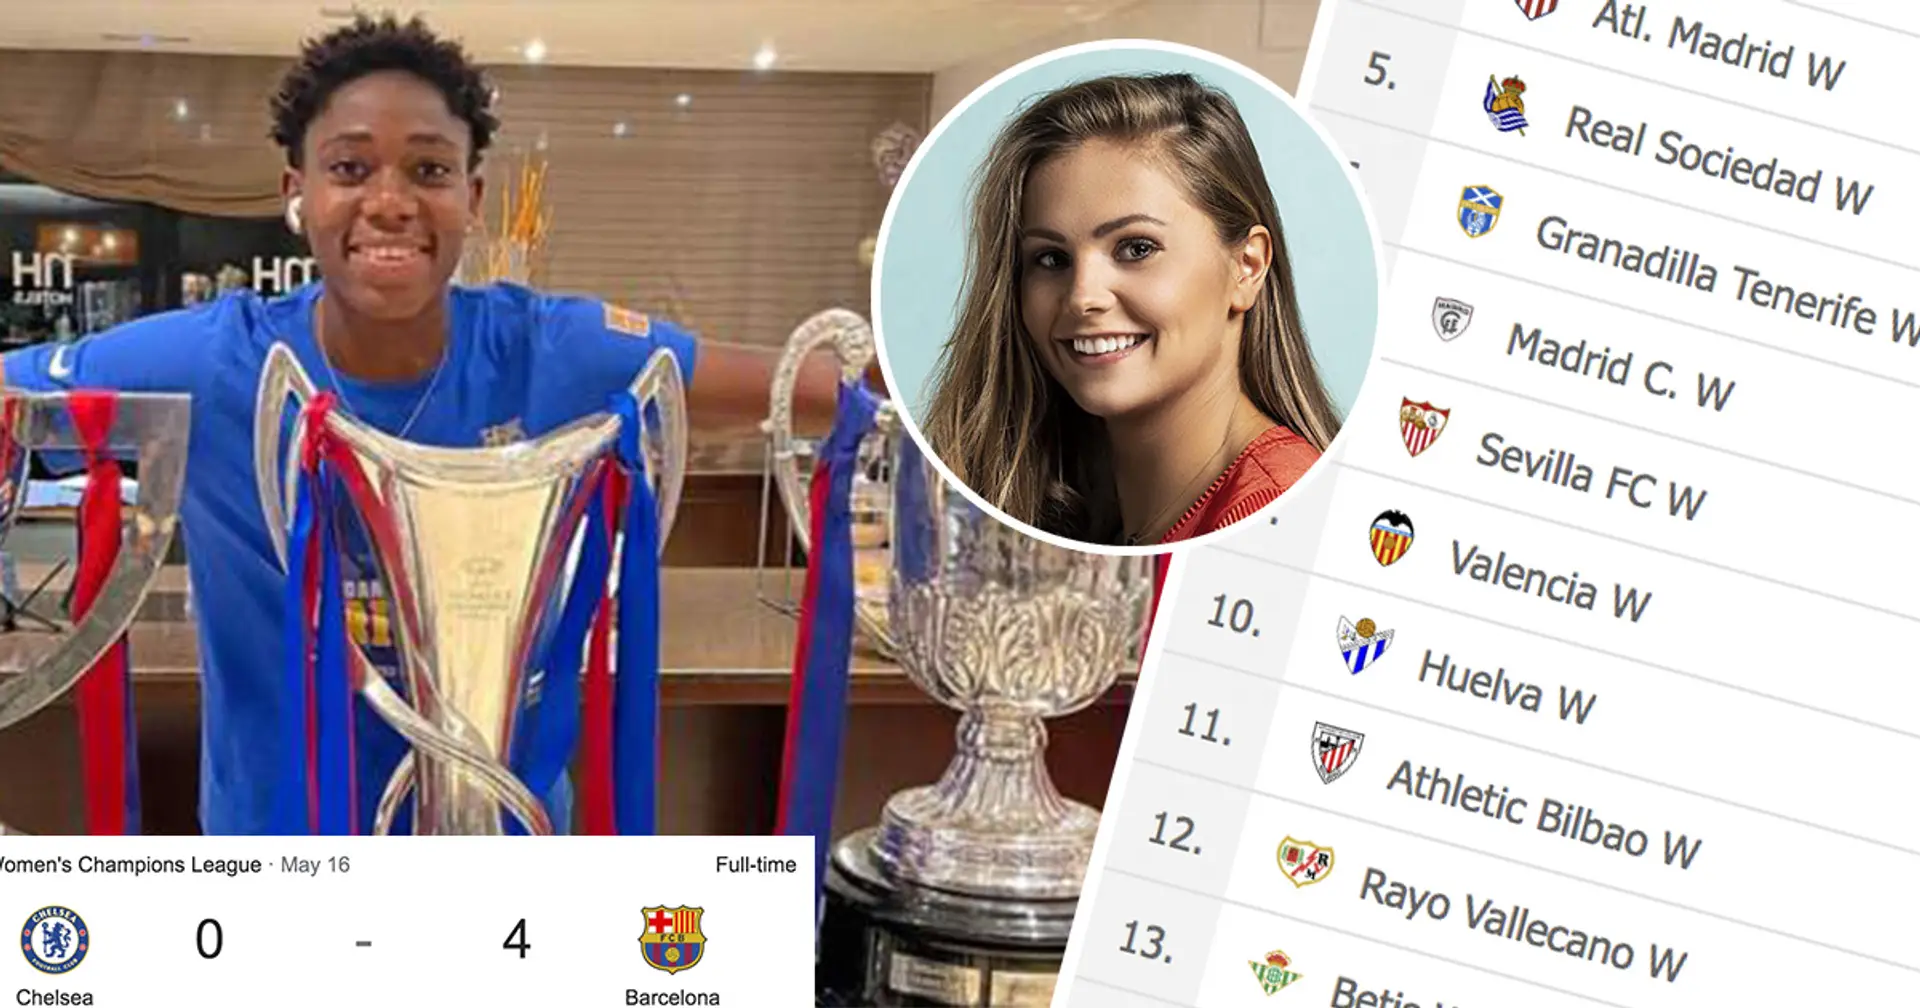 Barca Femeni finish season with 9-1 win: Final results, top scorers, biggest wins